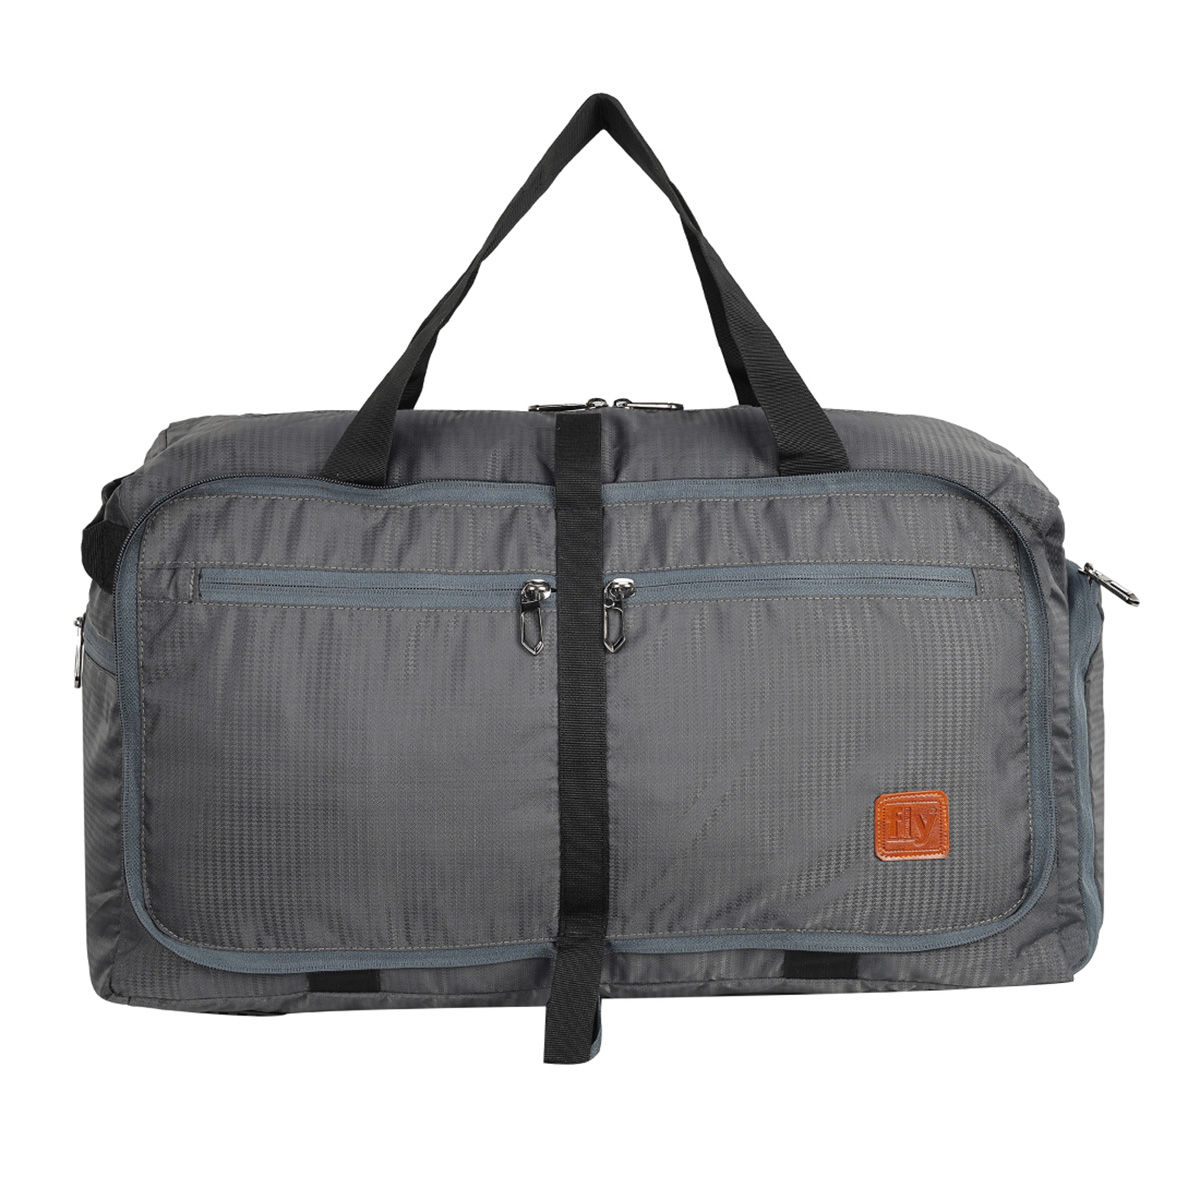 Skypak 75cm Large Folding Travel Bag at Luggage Superstore